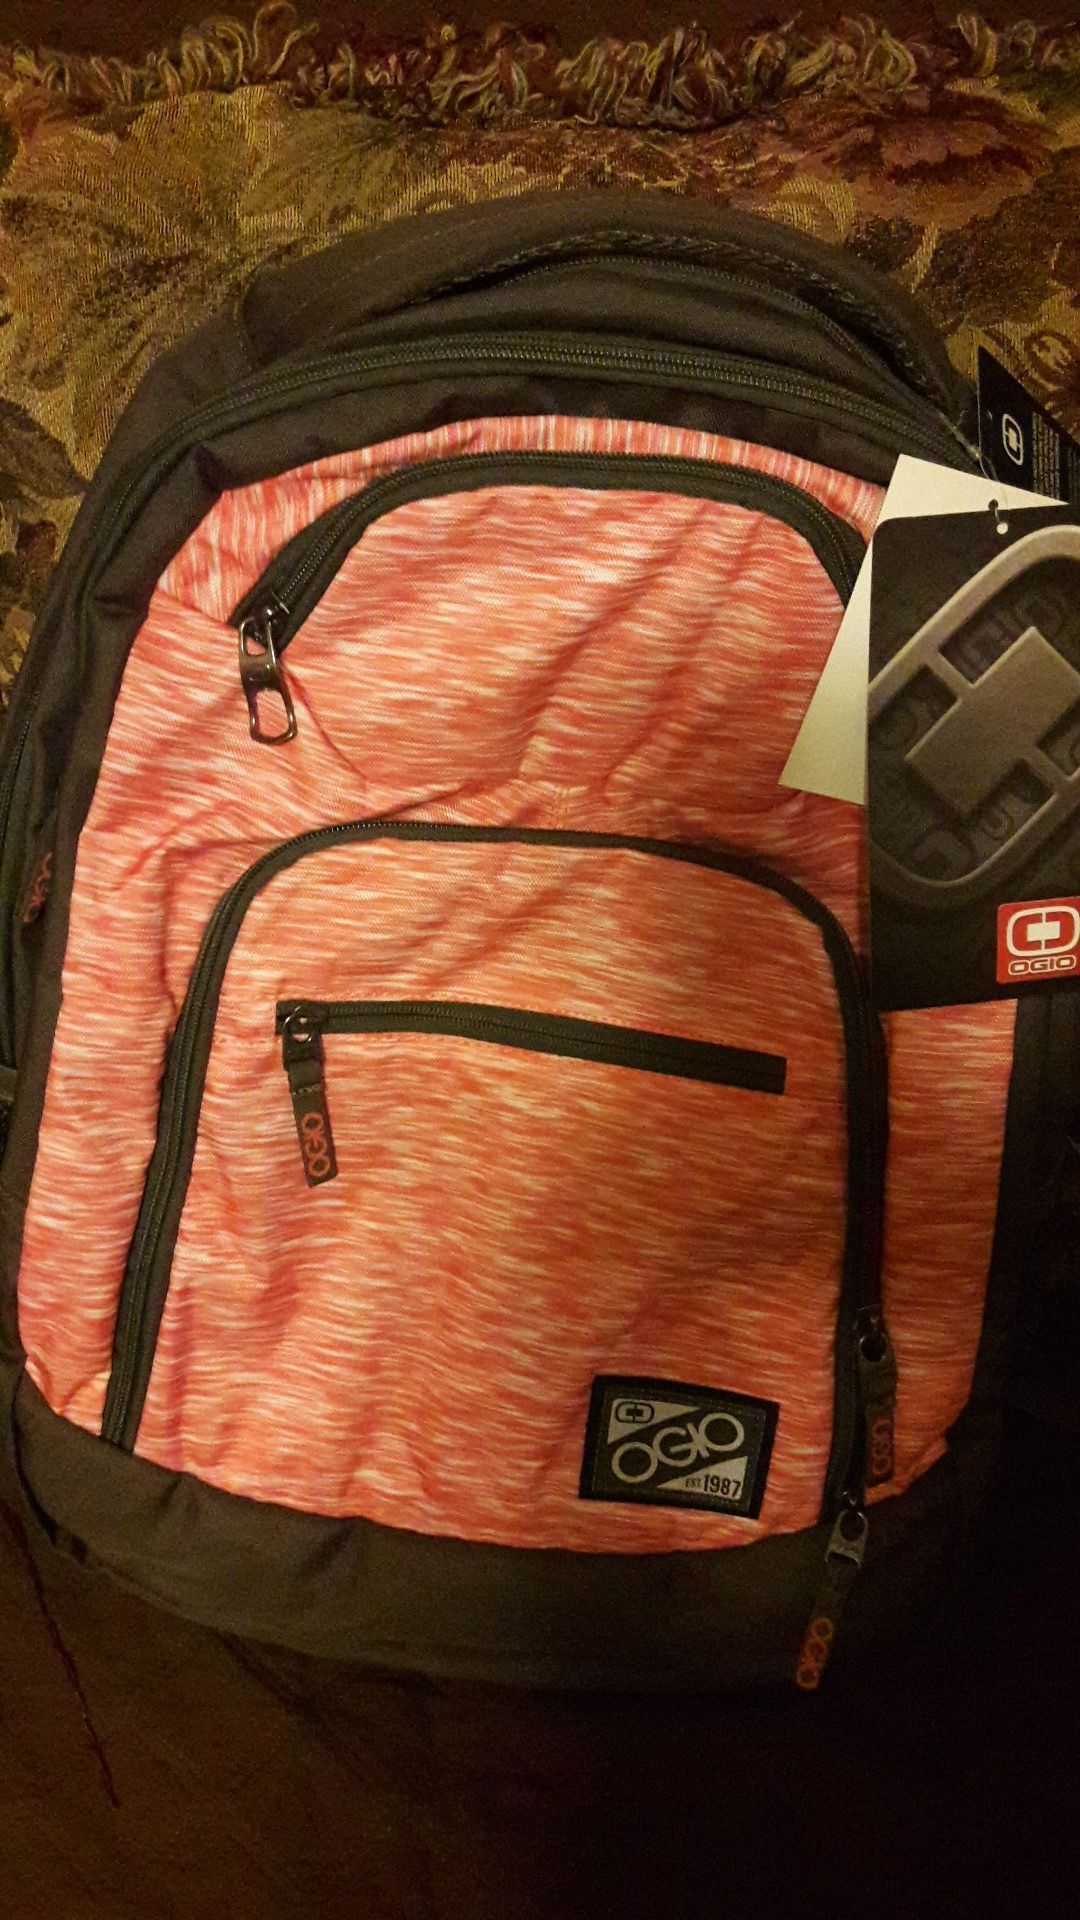 NEW OGiO Laptop Orange/Brown Backpack.